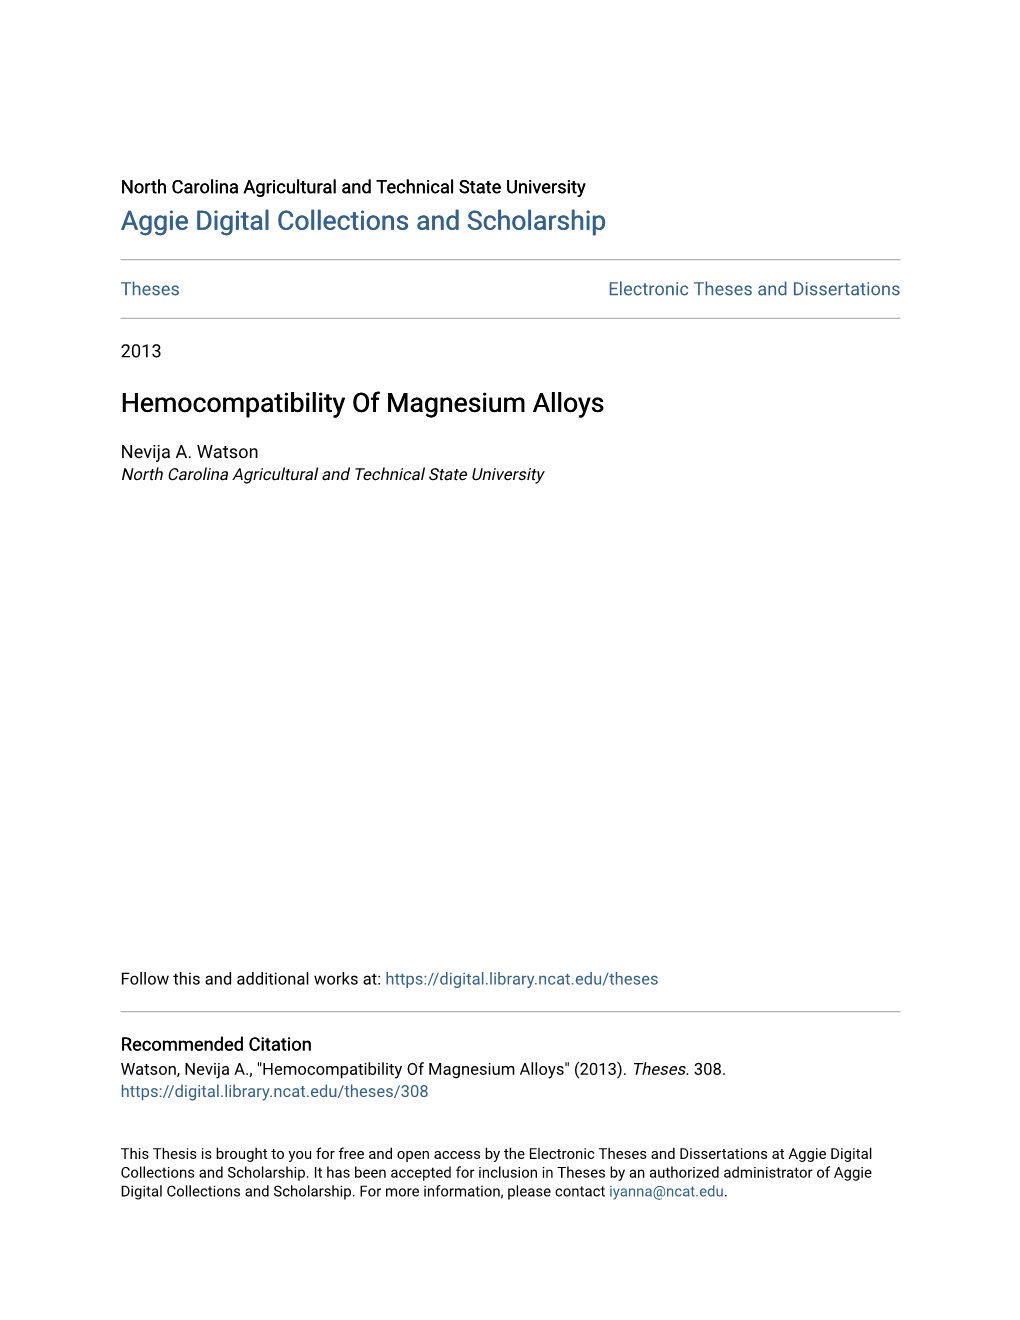 Hemocompatibility of Magnesium Alloys